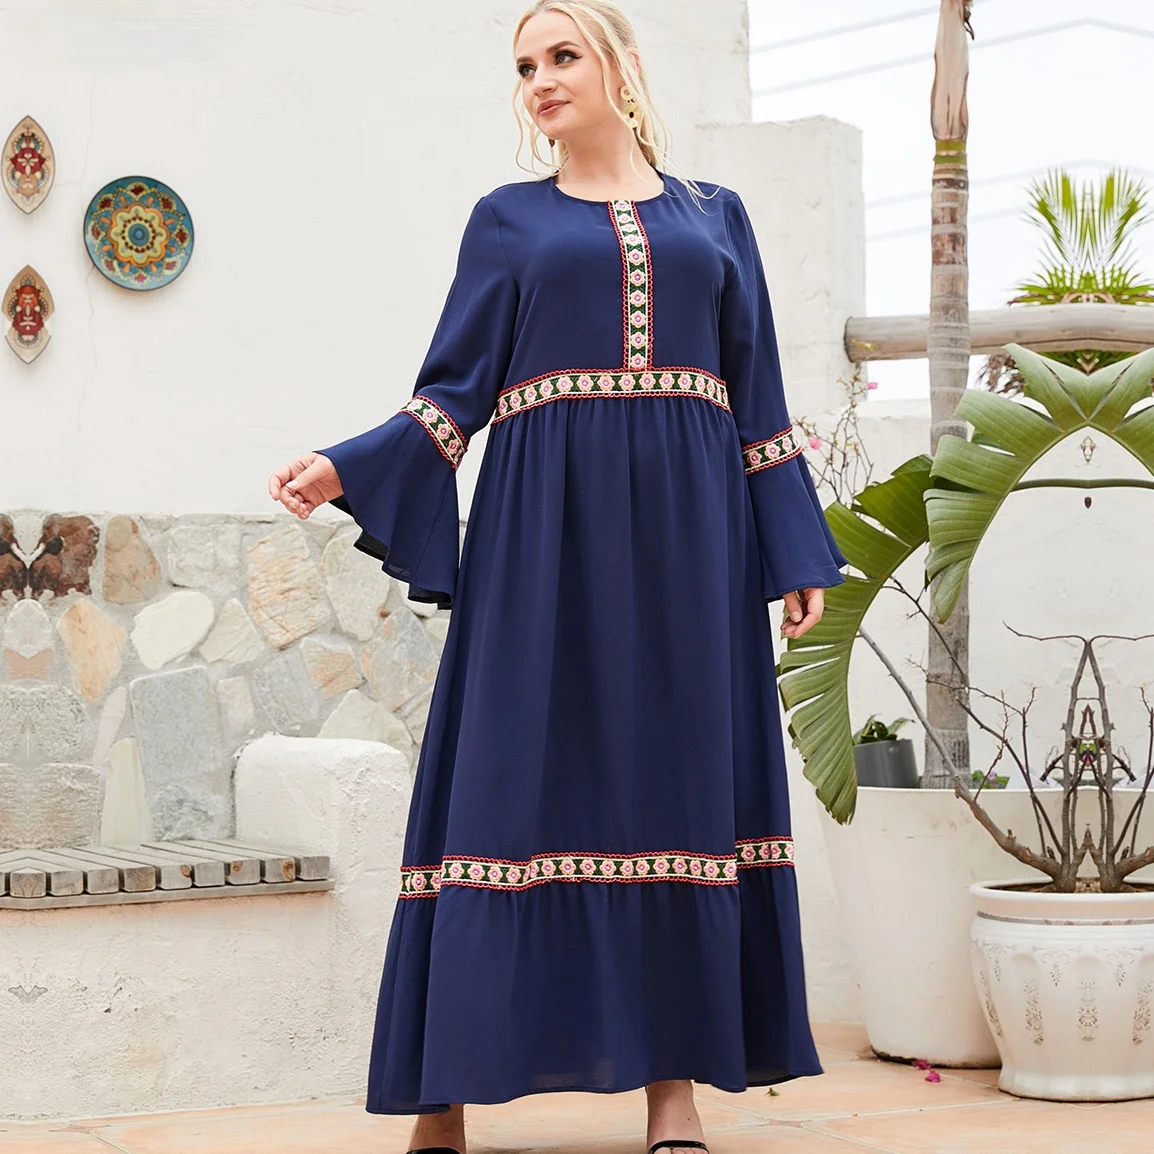 2021 Muslim Women's Large Size Women's Lace Flared Long Sleeve Pleated Bohemian Dress Fashion Muslim Abaya Kaftan Robe